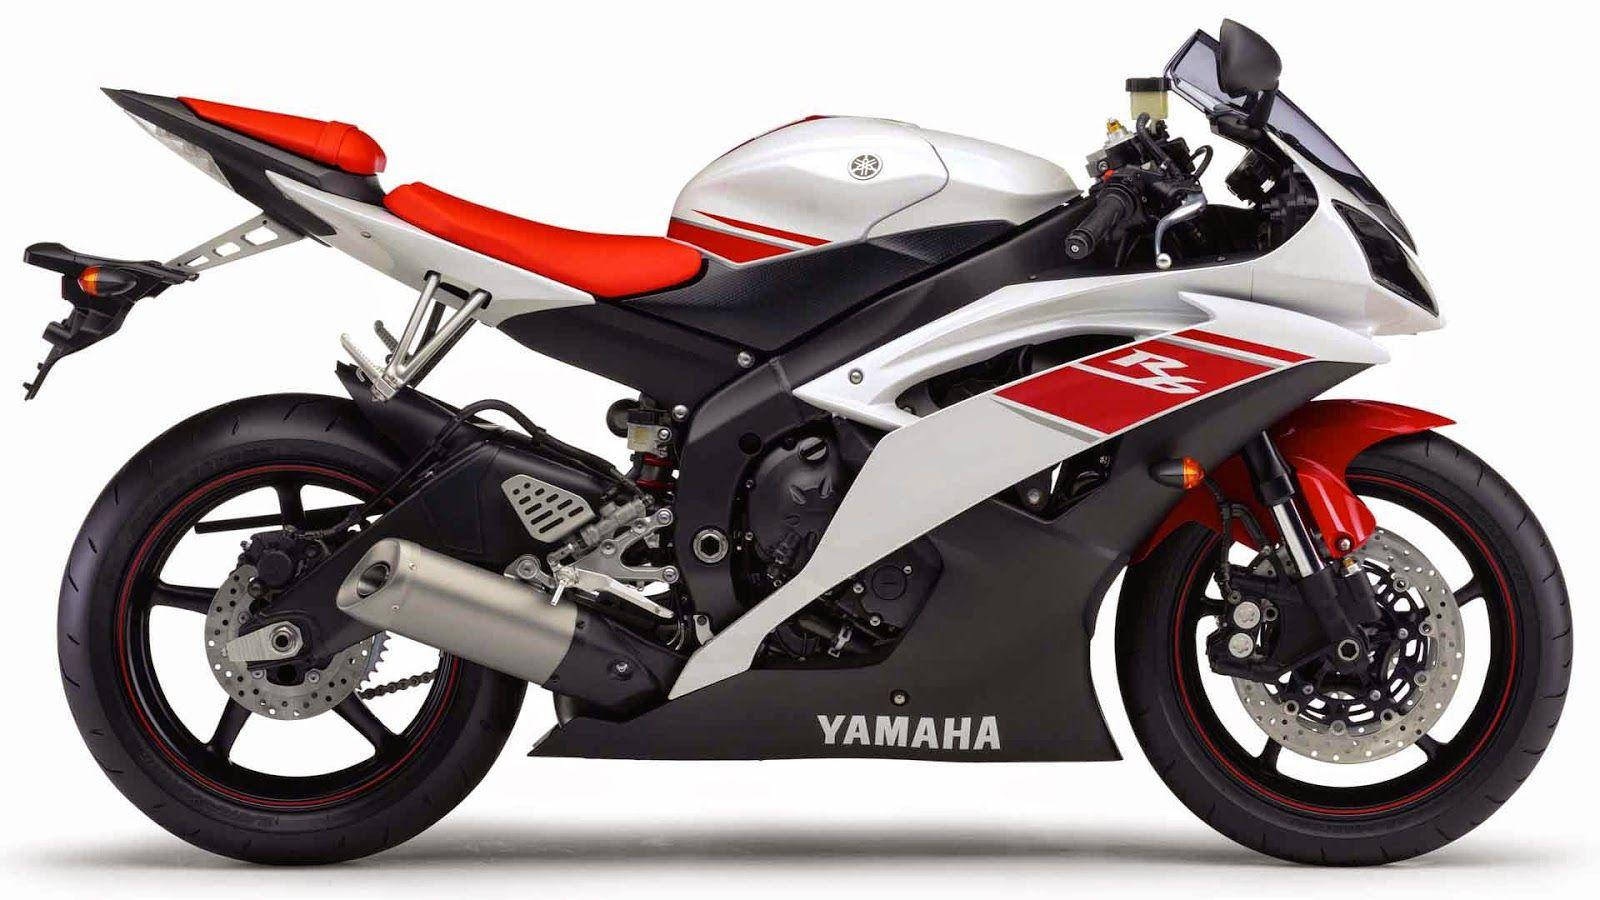 Yamaha Yzf-r6 Bikes On White Wallpaper